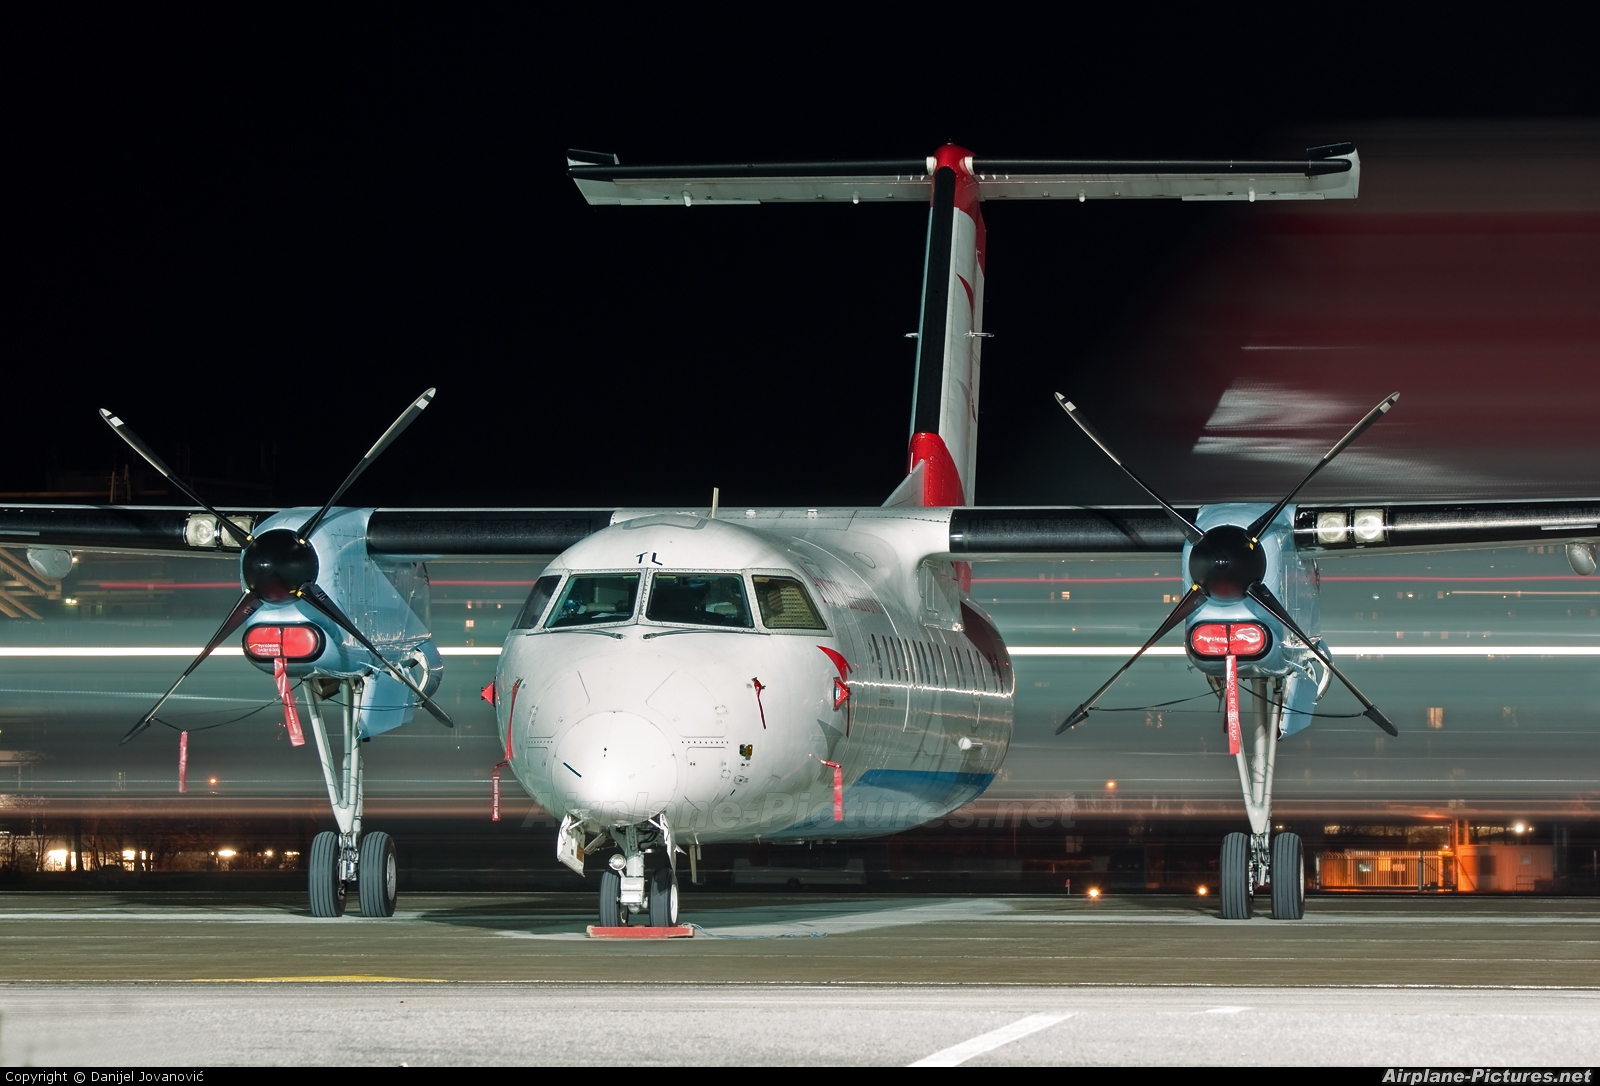 Austrian Airlines/Arrows/Tyrolean OE-LTL aircraft at Innsbruck